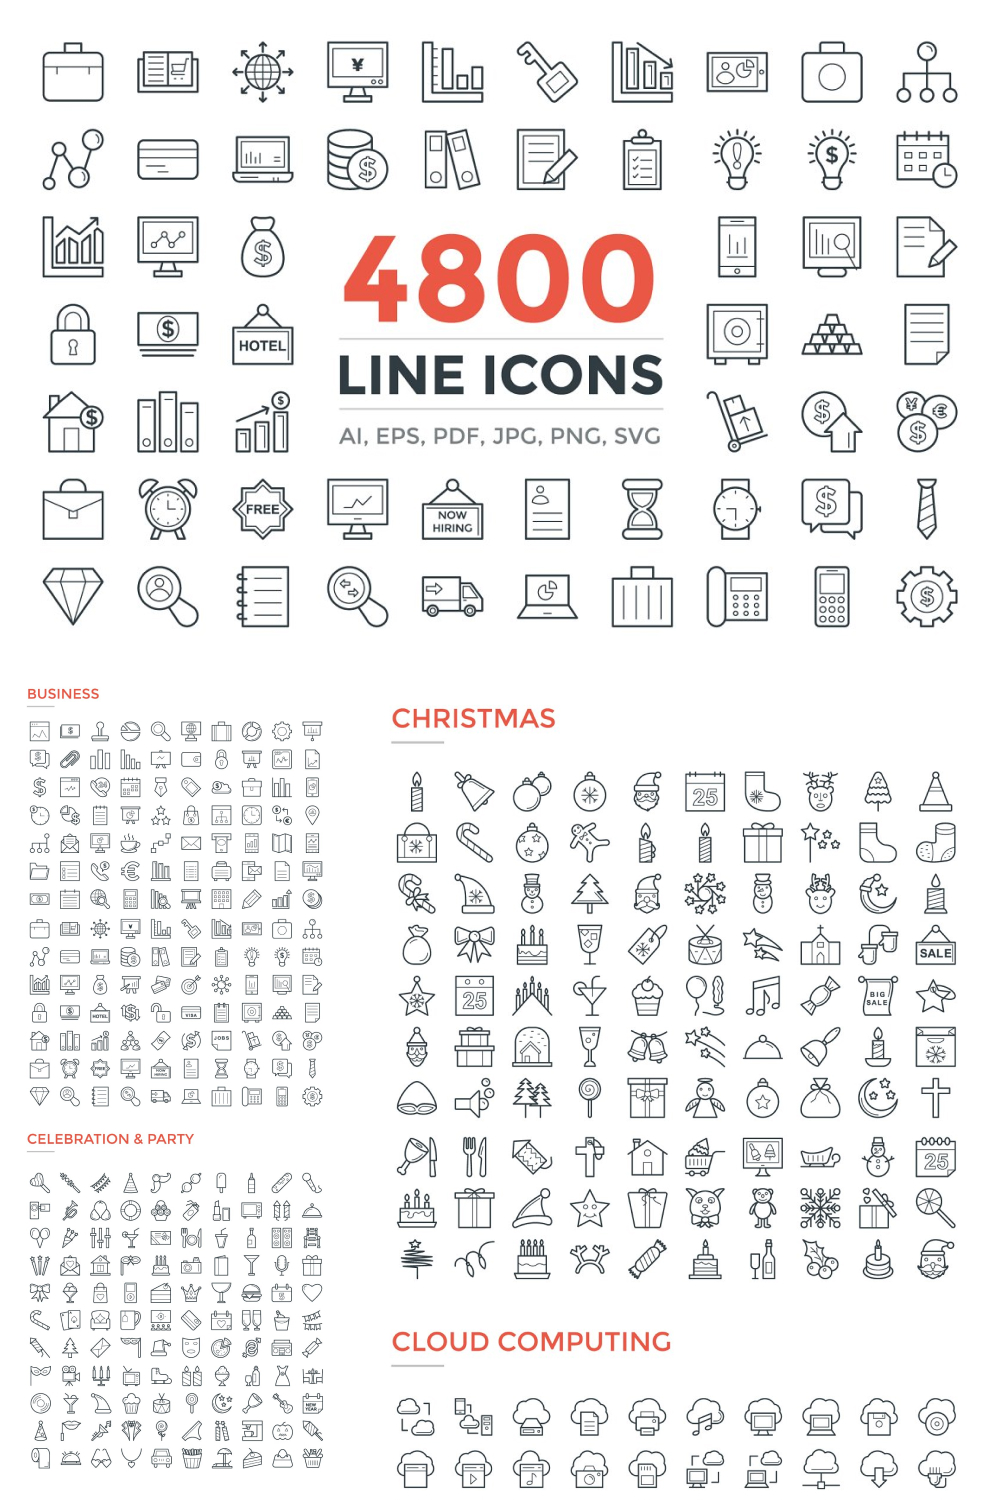 4800 Line Icons Pack - Pinterest.